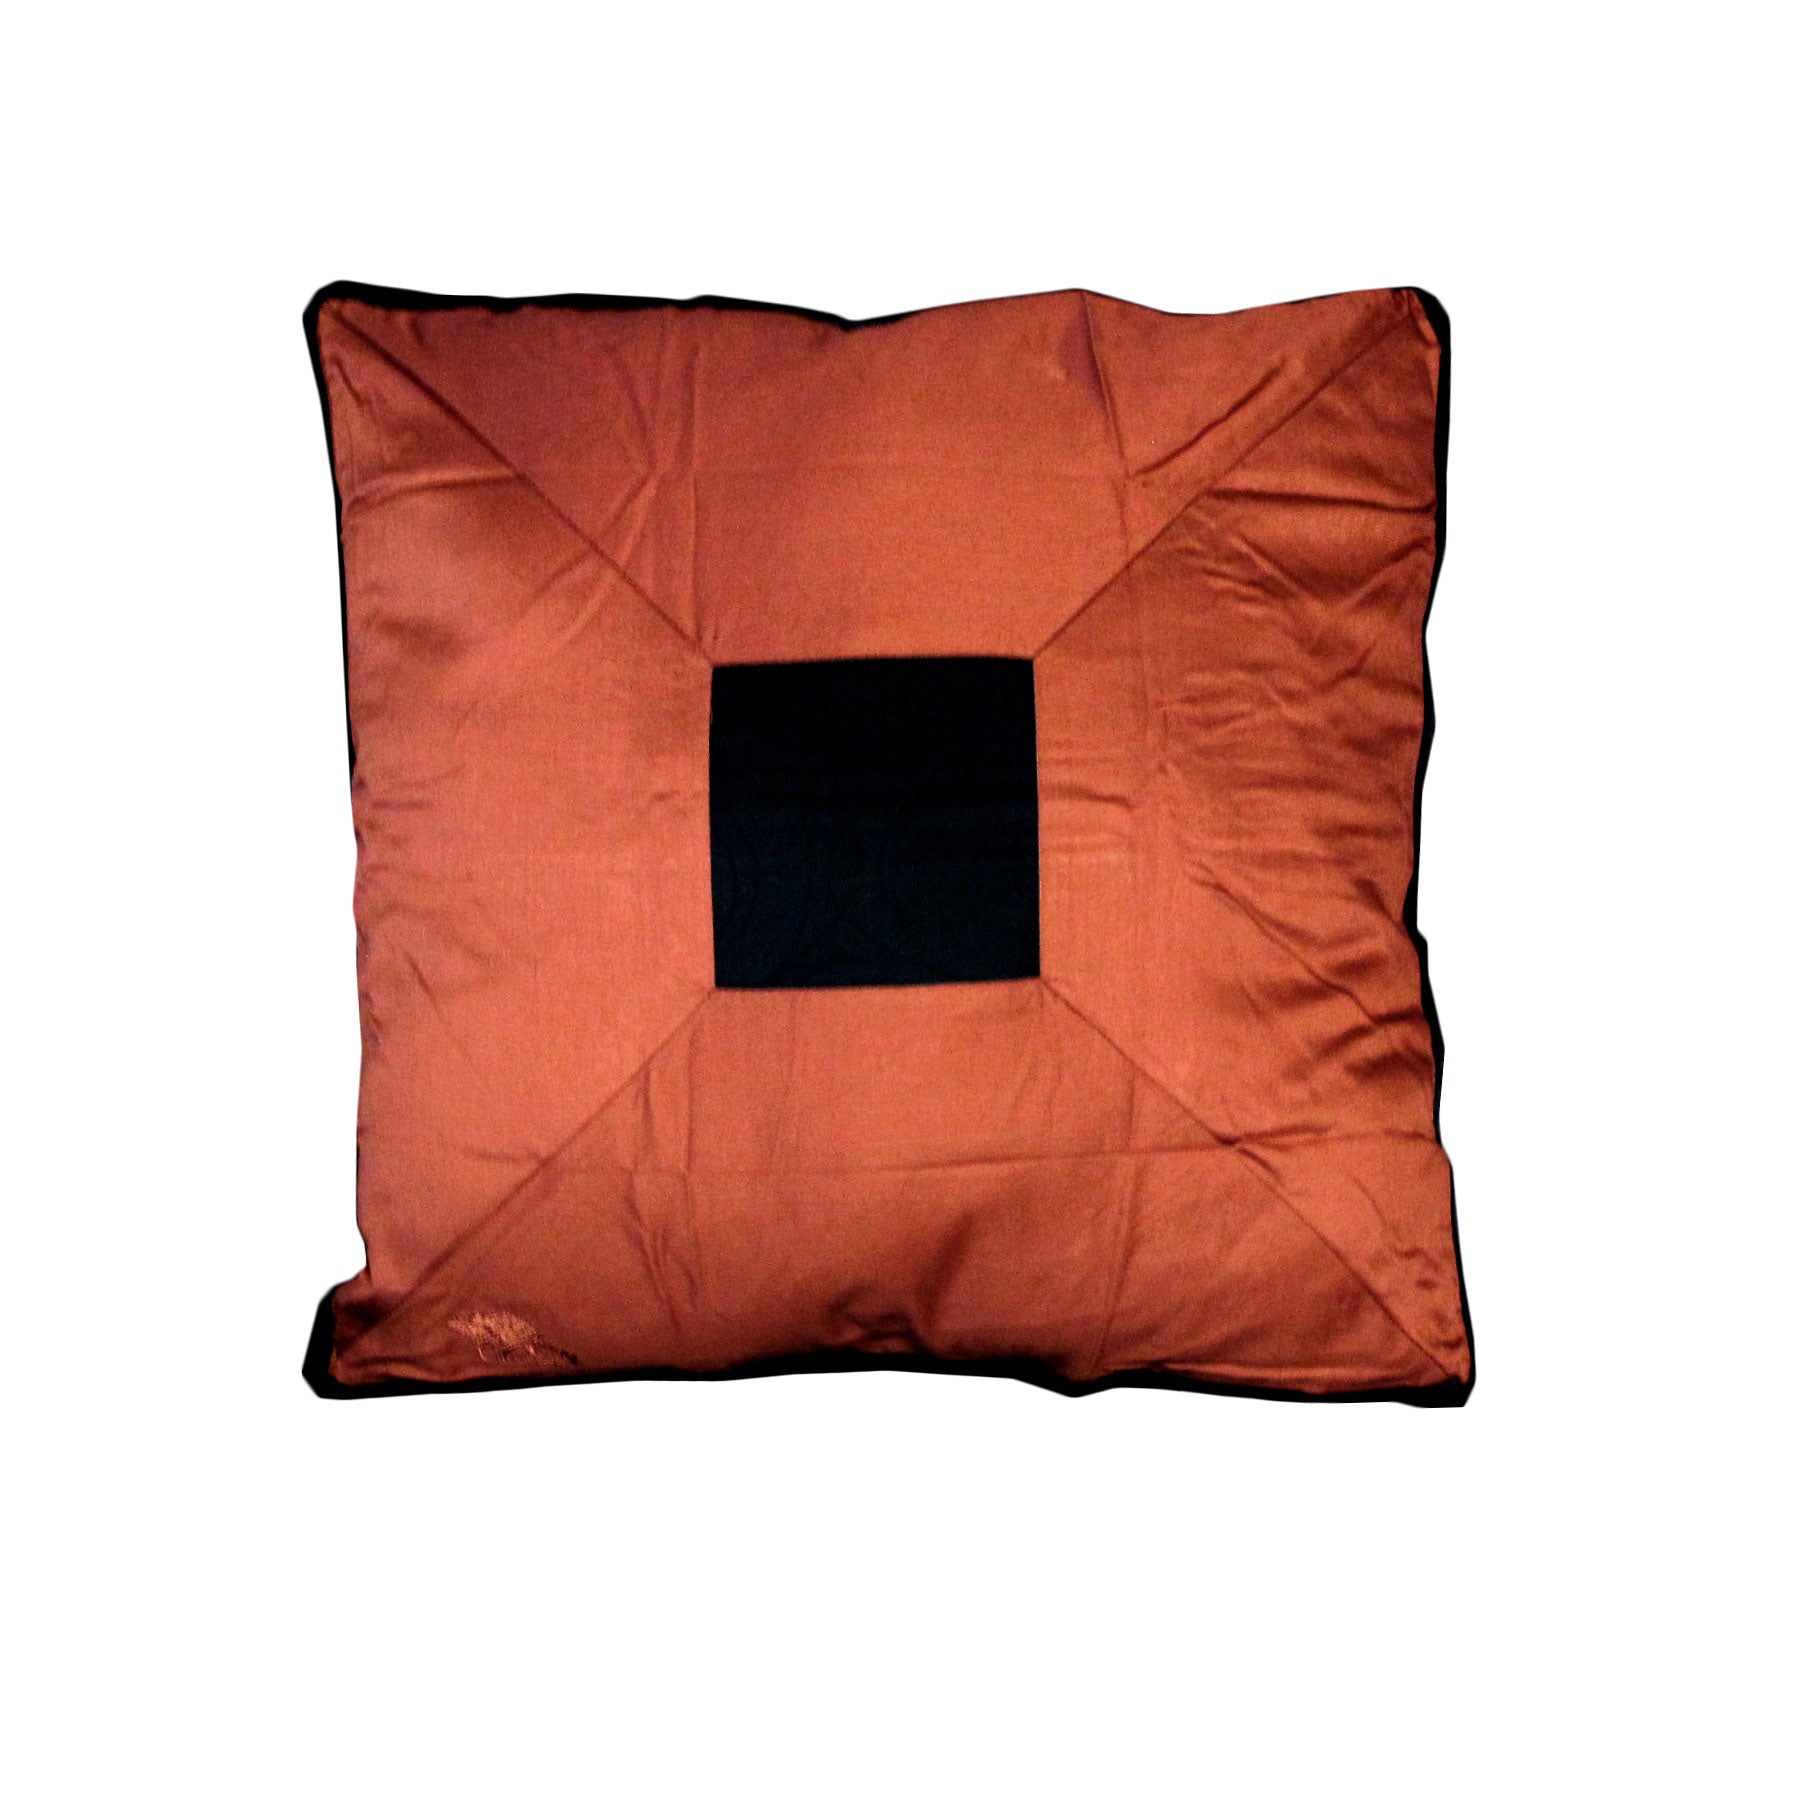 Venucci Cushion Cover